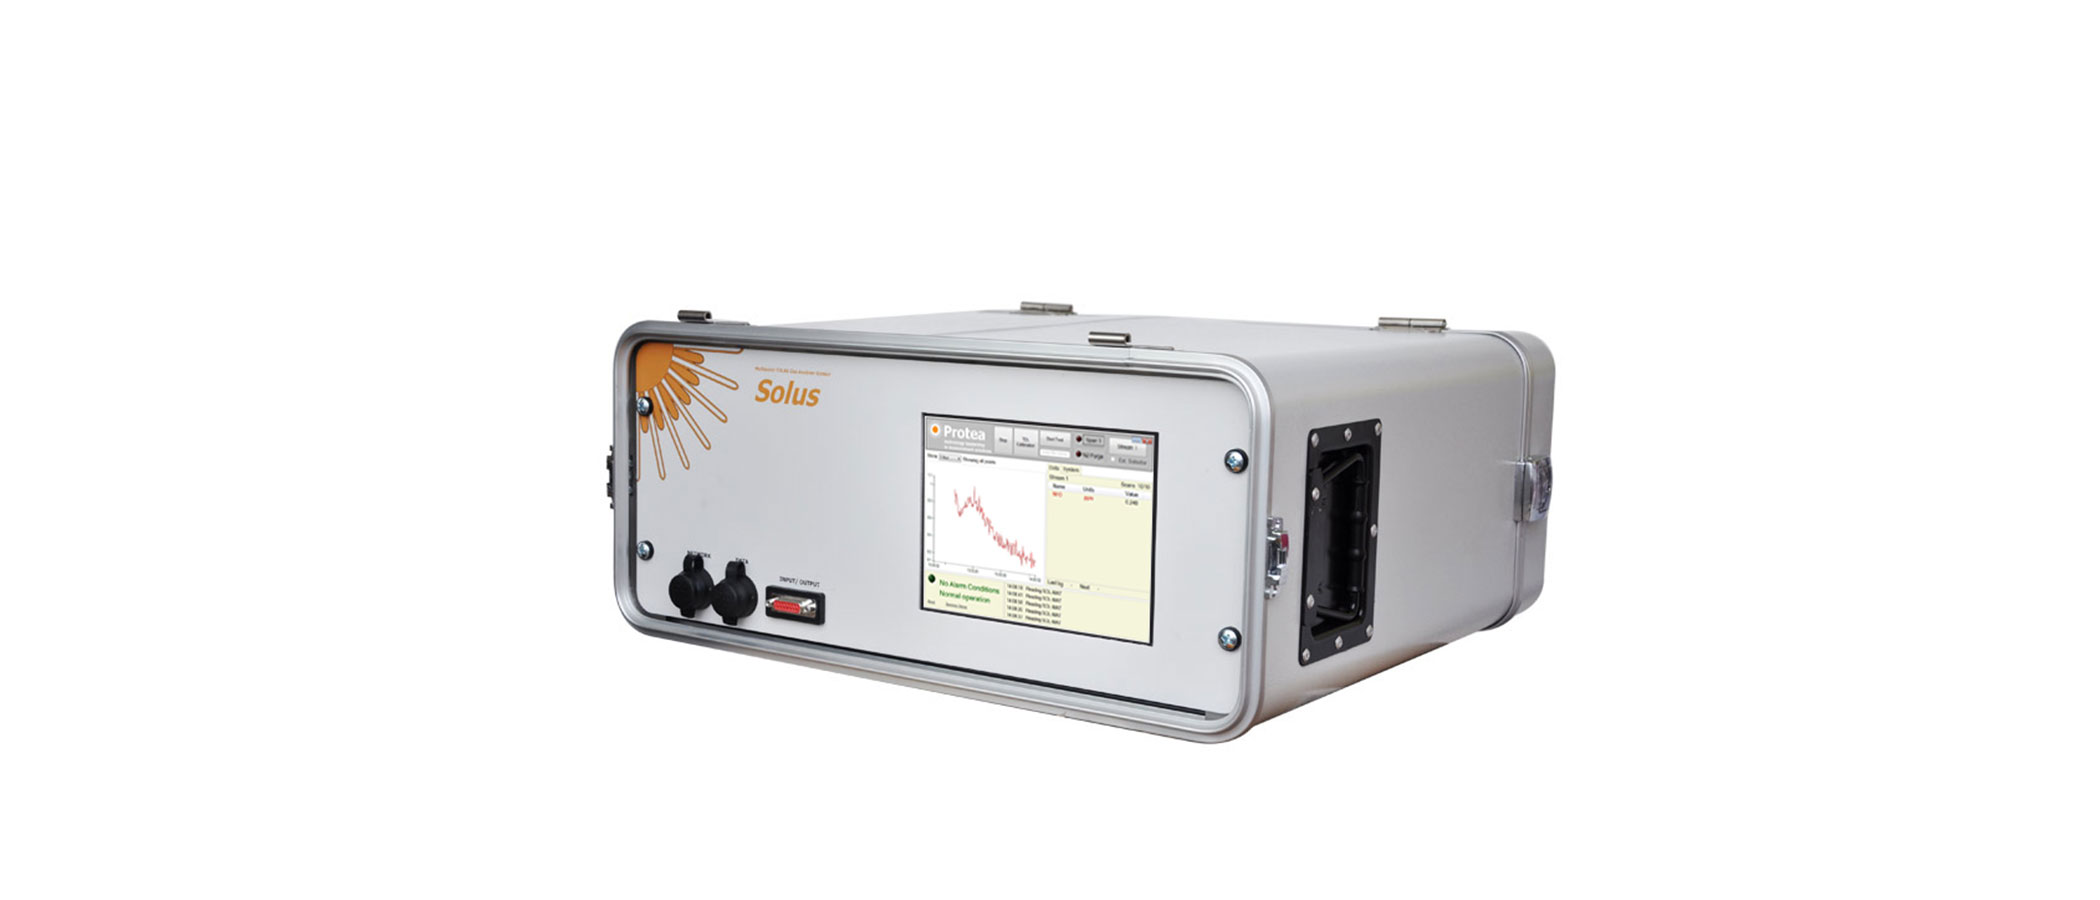 Solus Multipoint Portable Ammonia Analyser